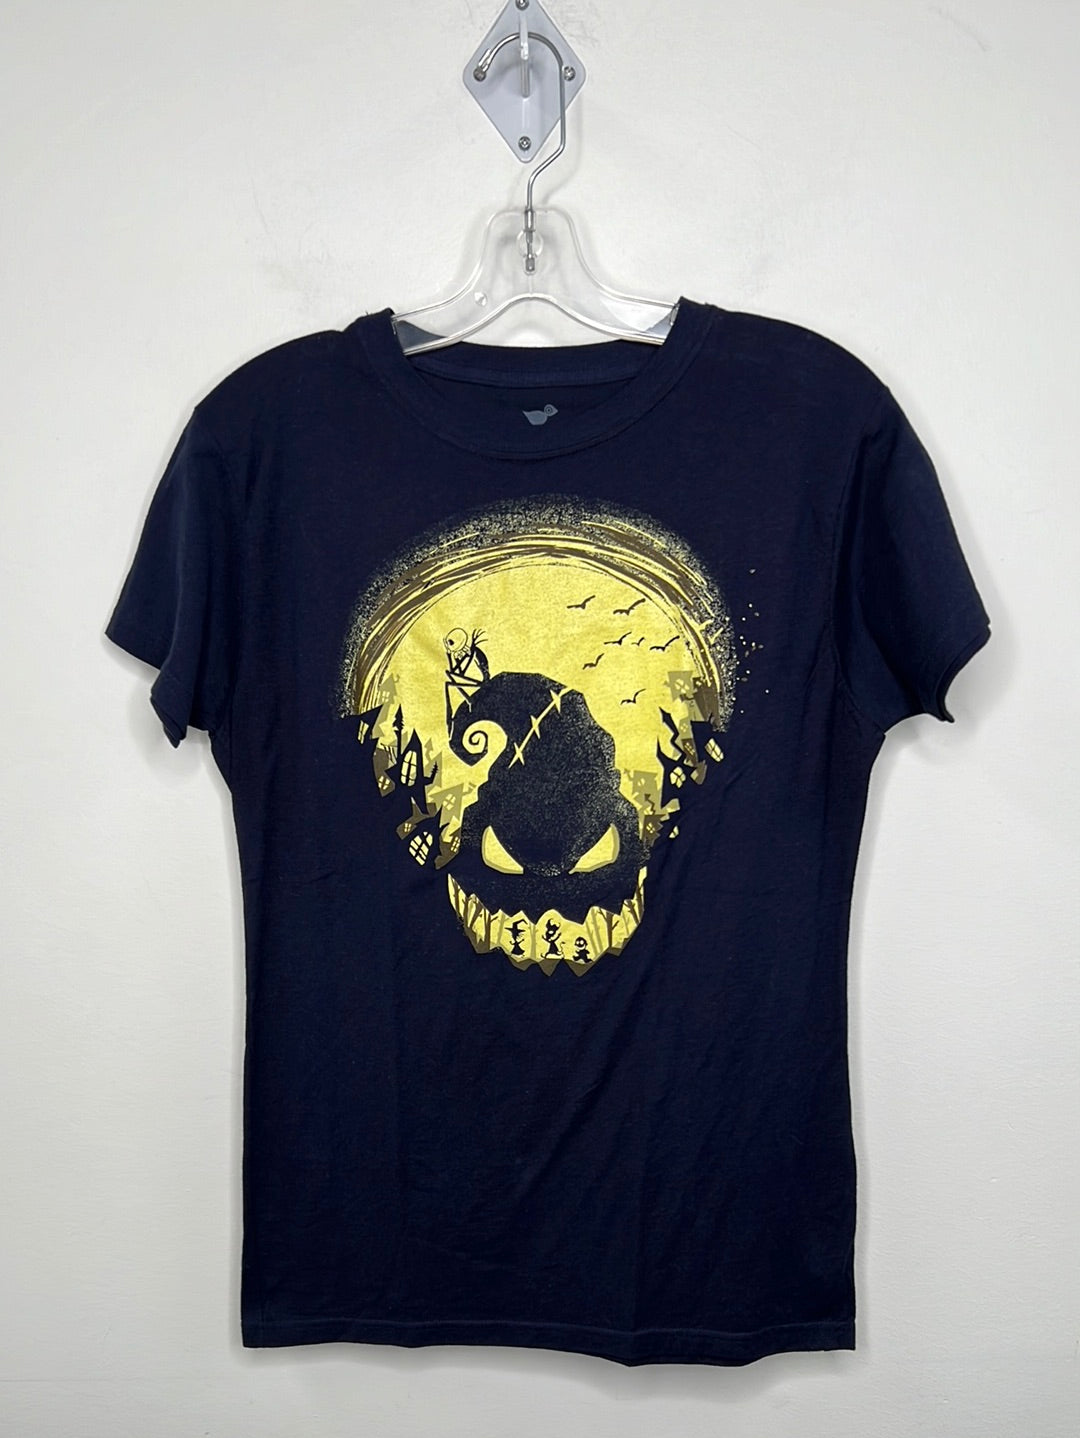 Tee Fury Graphic T-Shirt (XL)